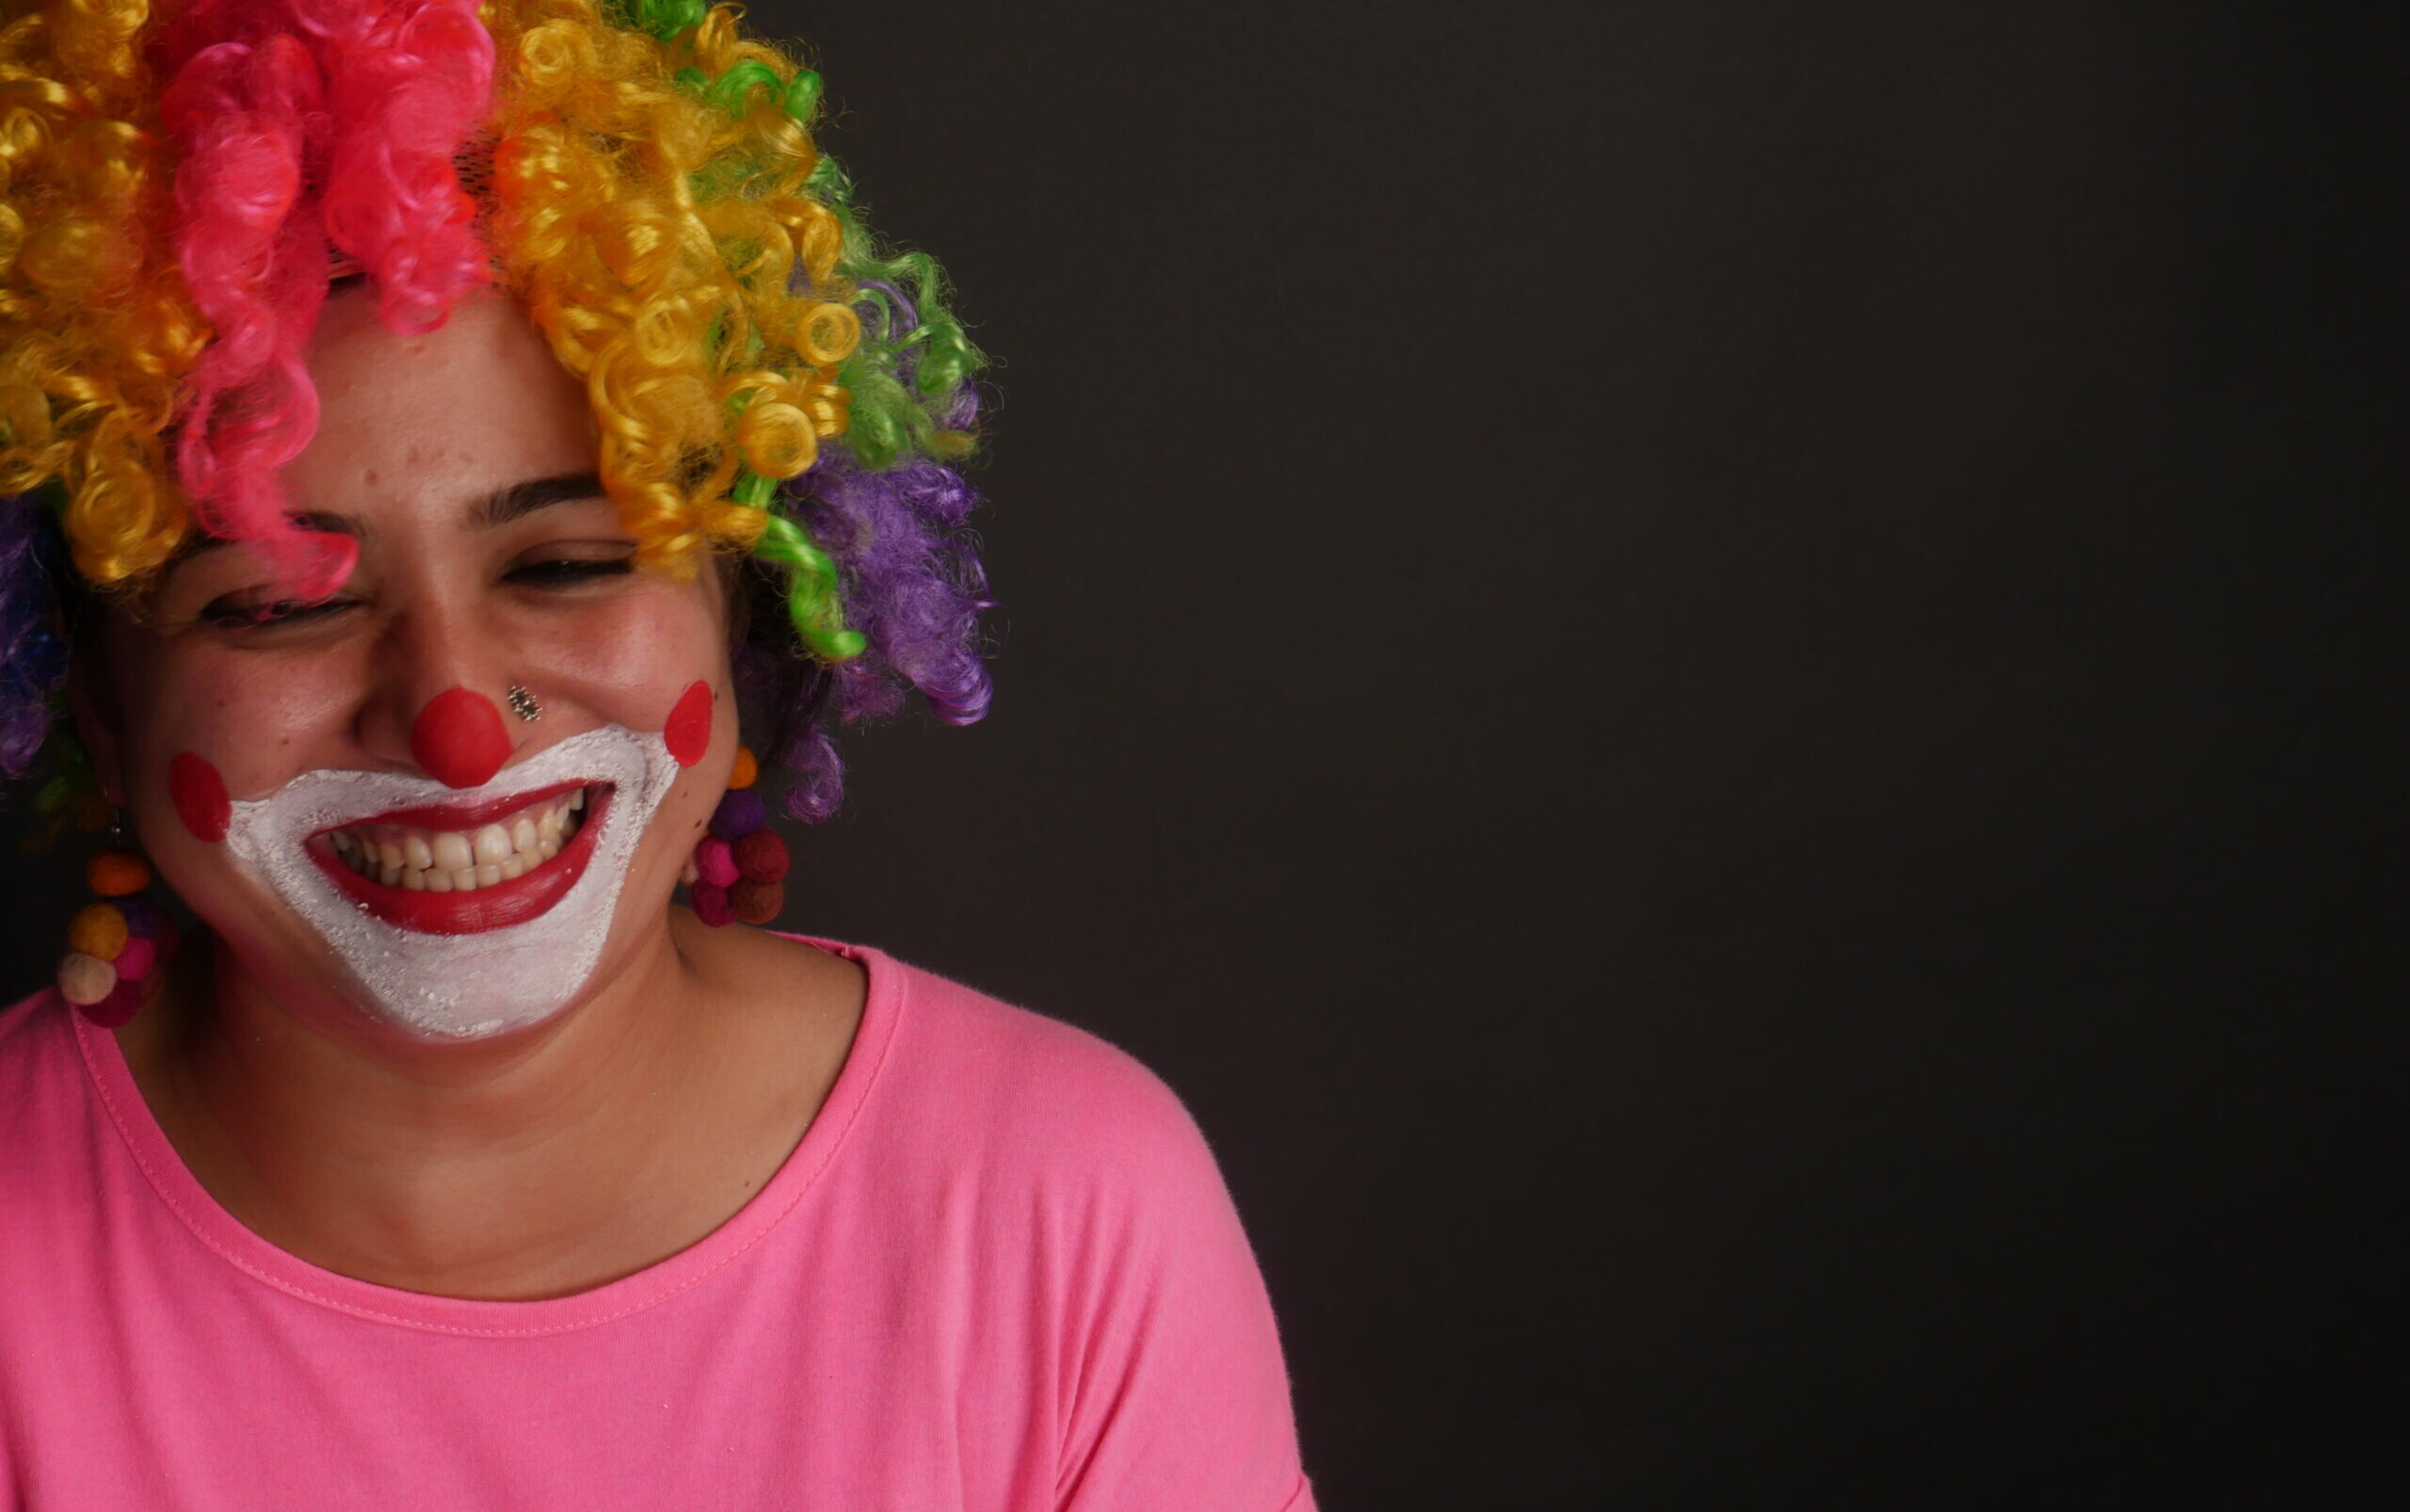 Medical Clowning: Healing through clowning